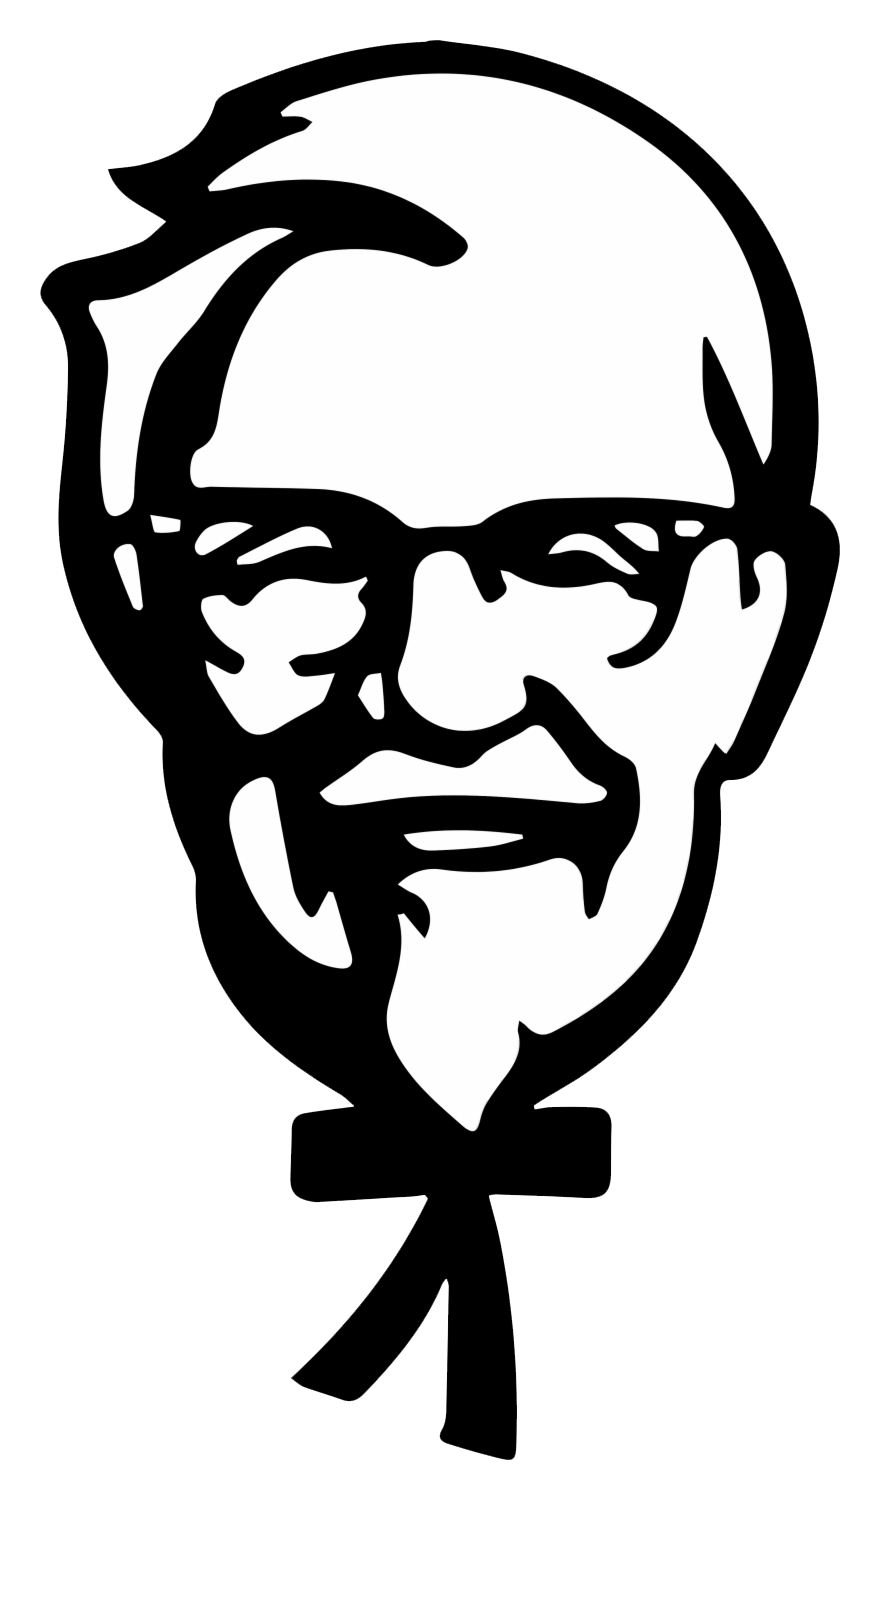 Immagine Trasparente logo KFC